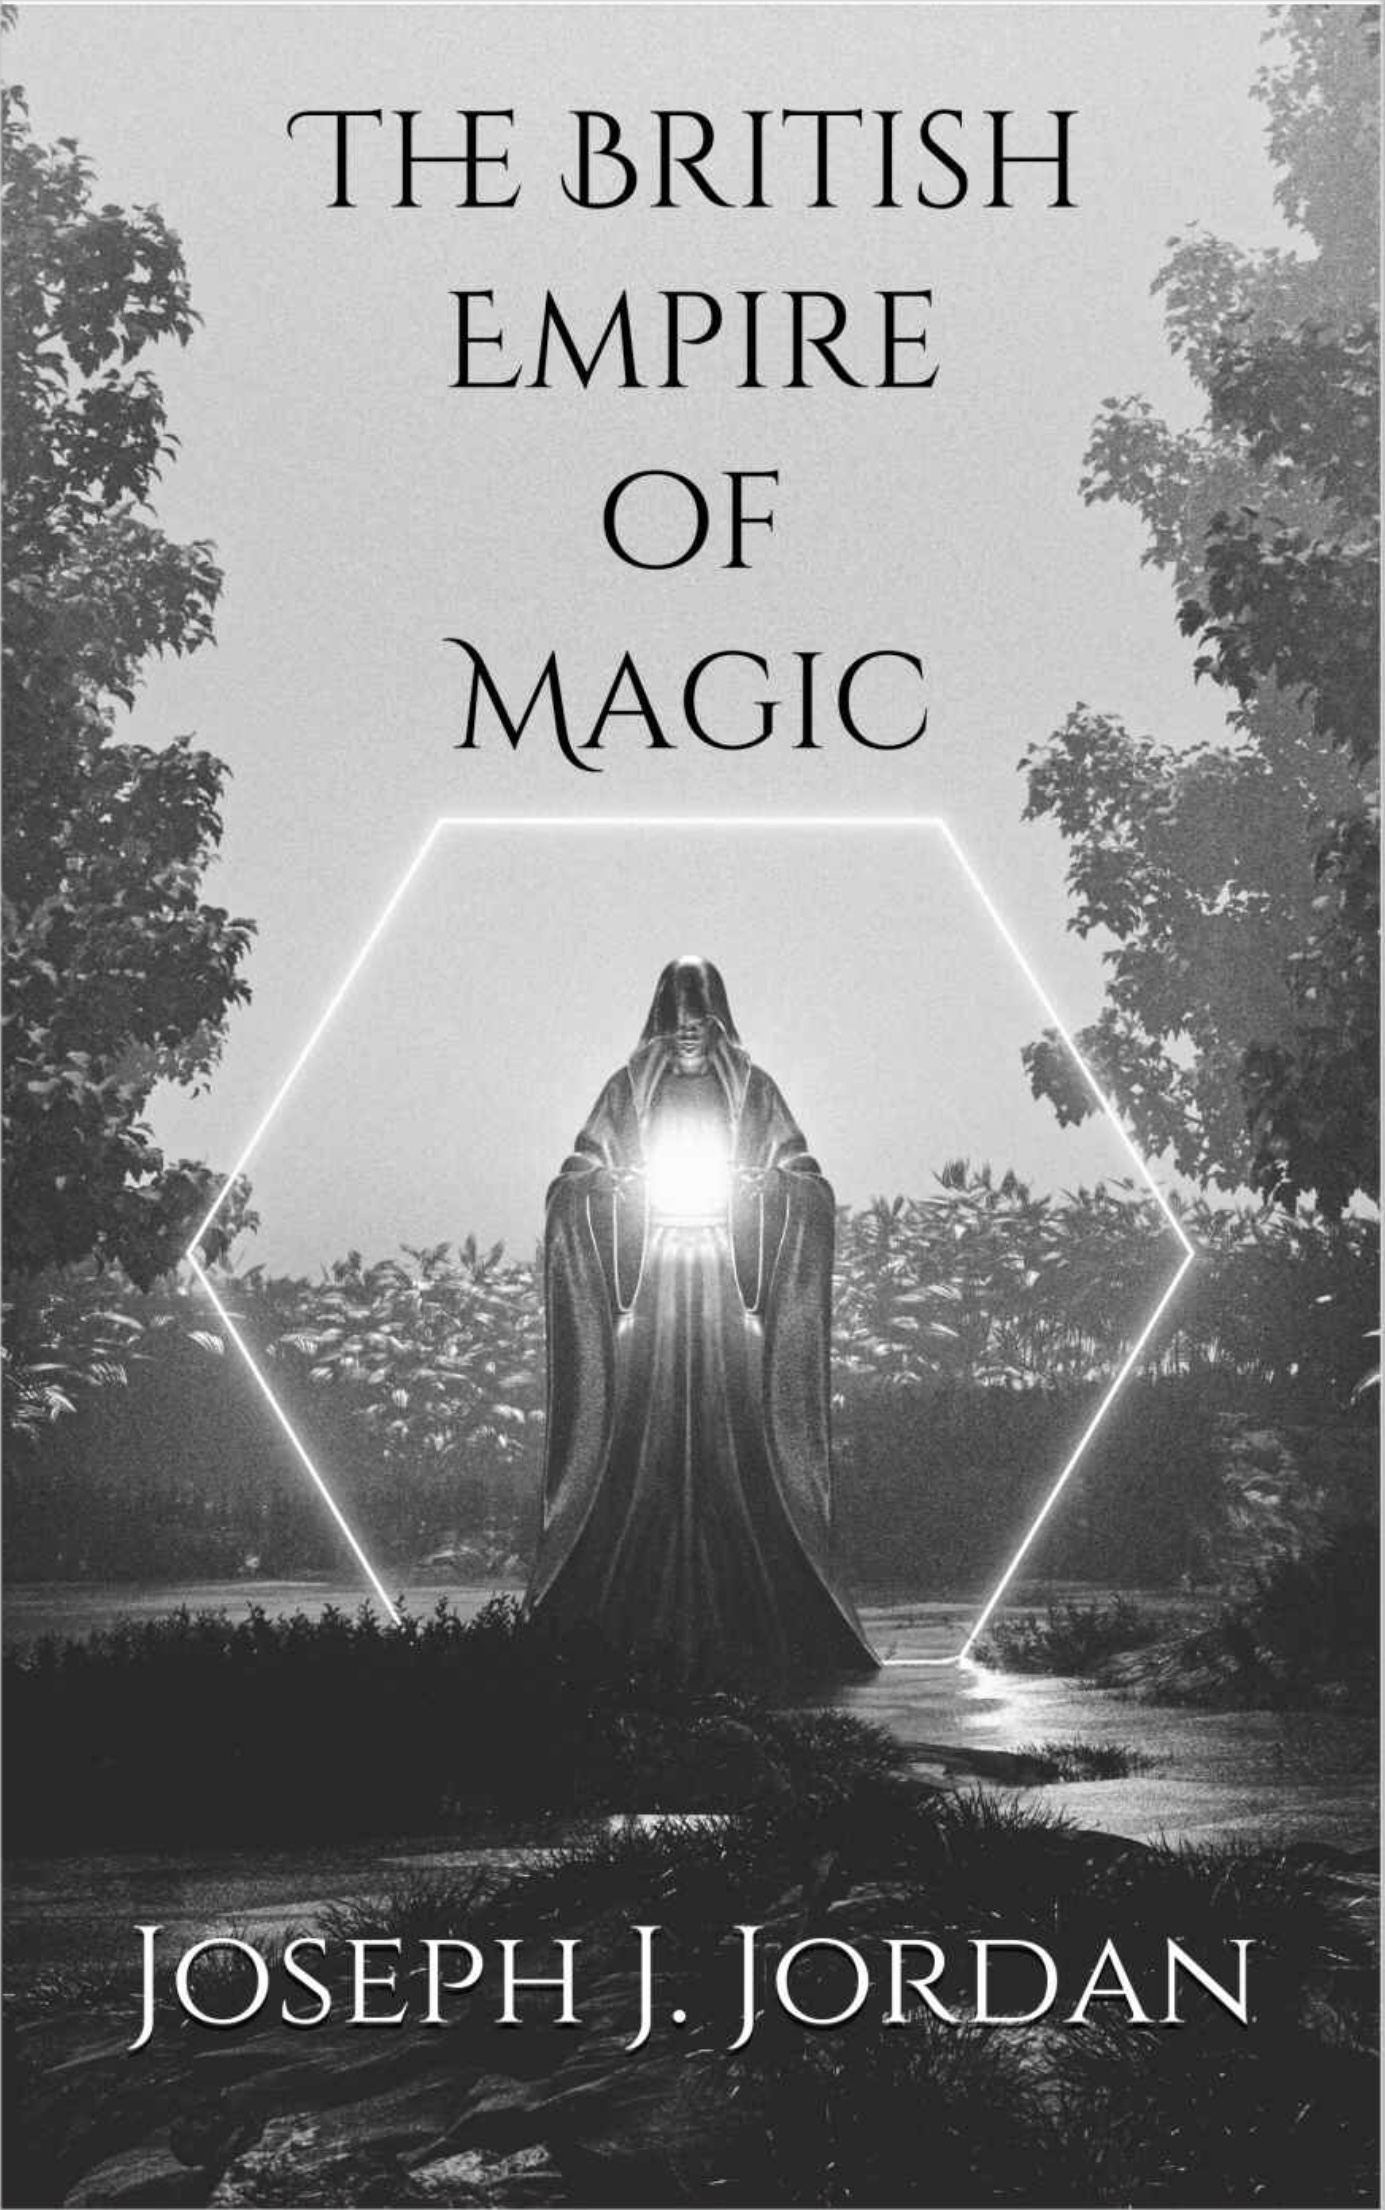 FREE: The British Empire of Magic by Joseph J. Jordan